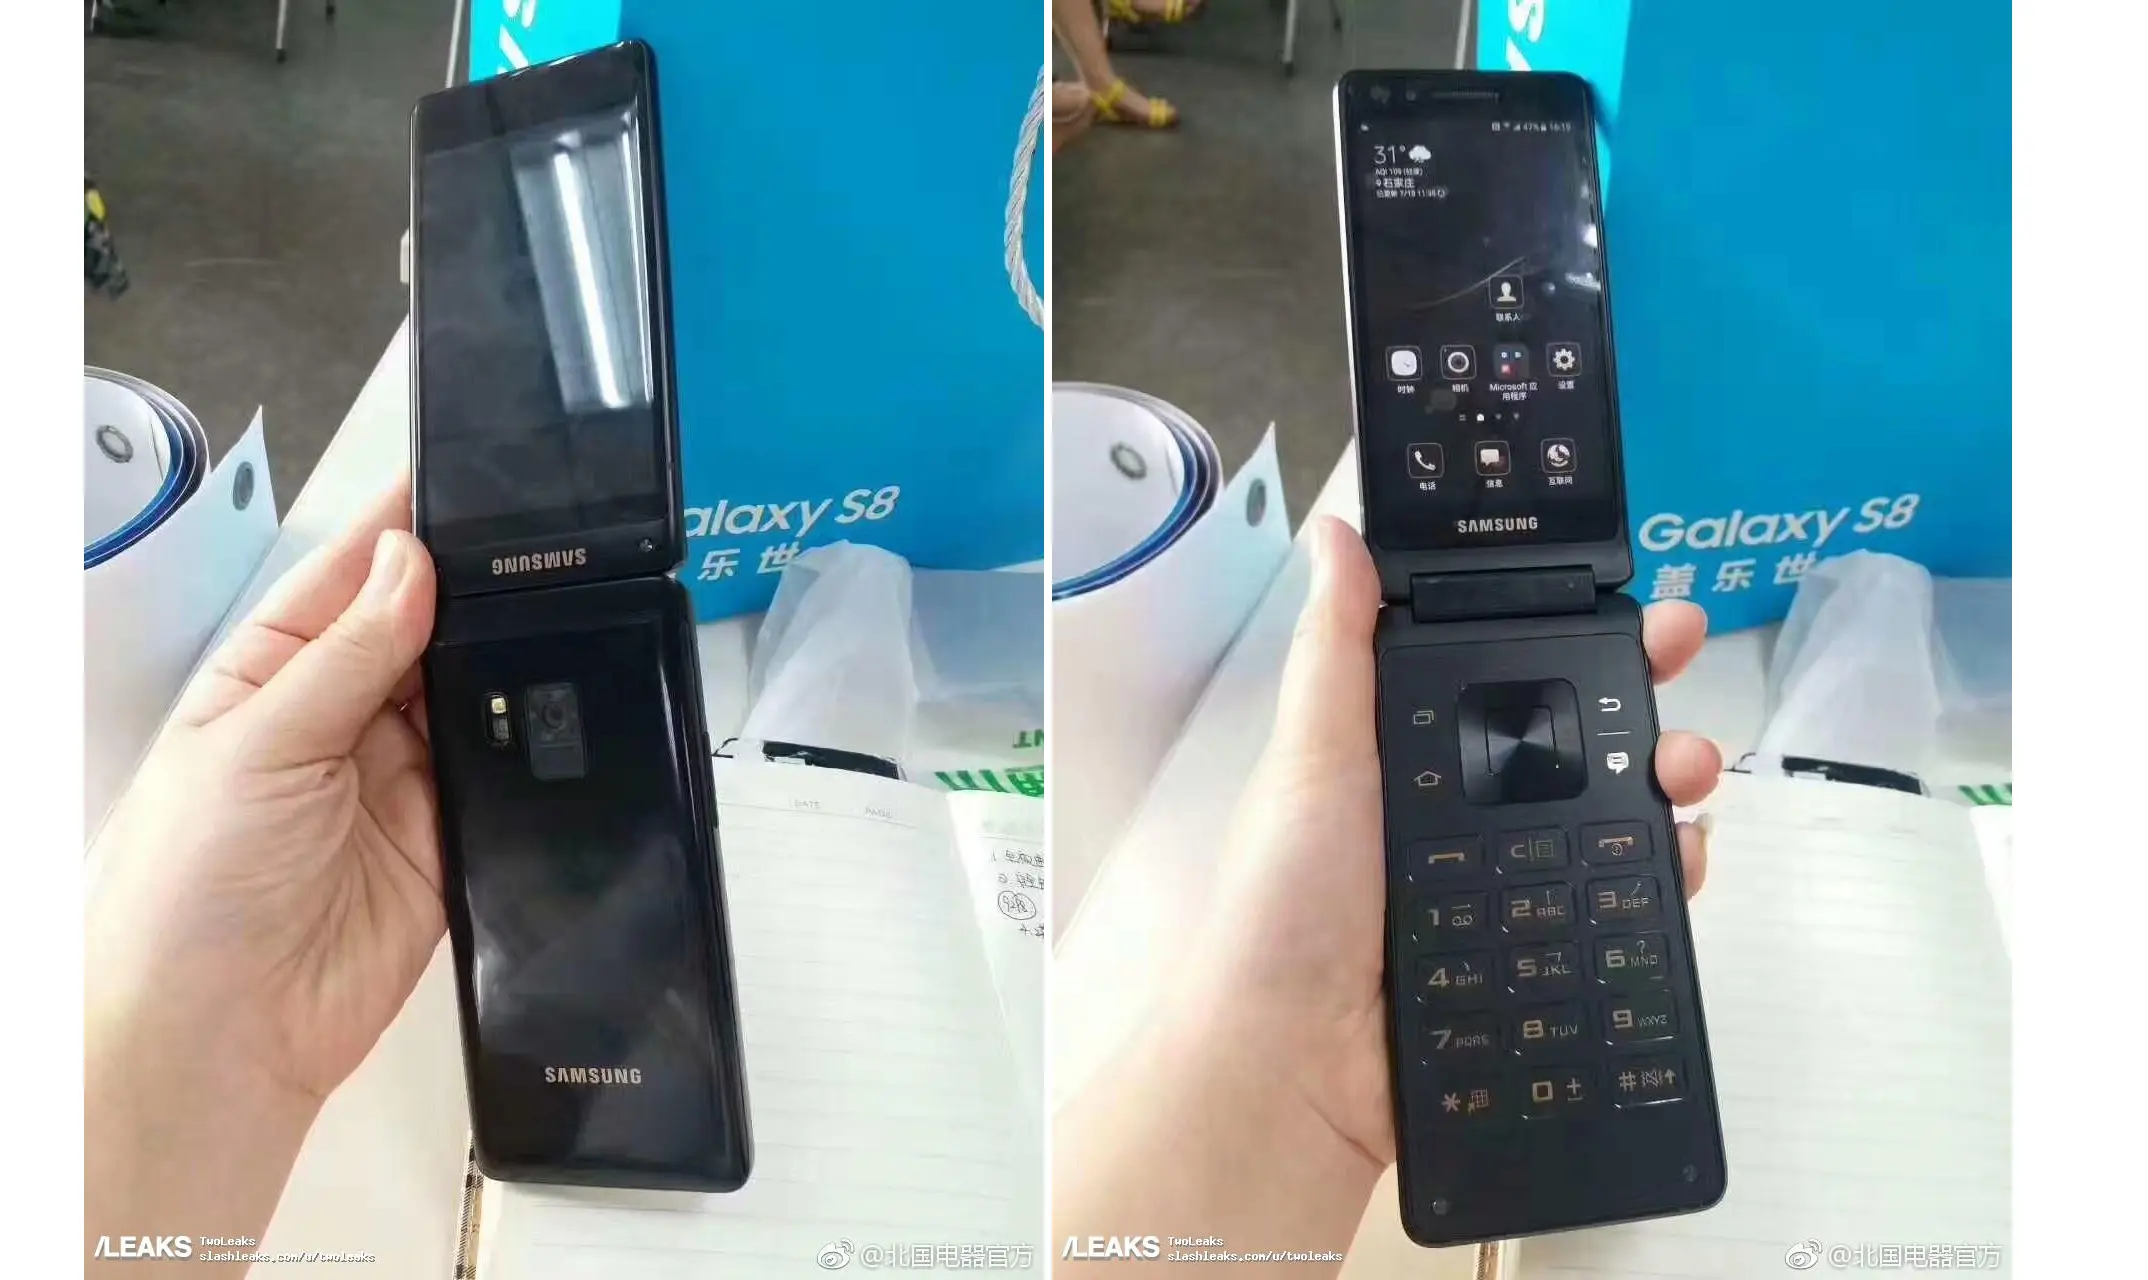 Smartphone lipat mirip Galaxy S8 yang akan segera dirilis Samsung (Sumber: Gizmochina)